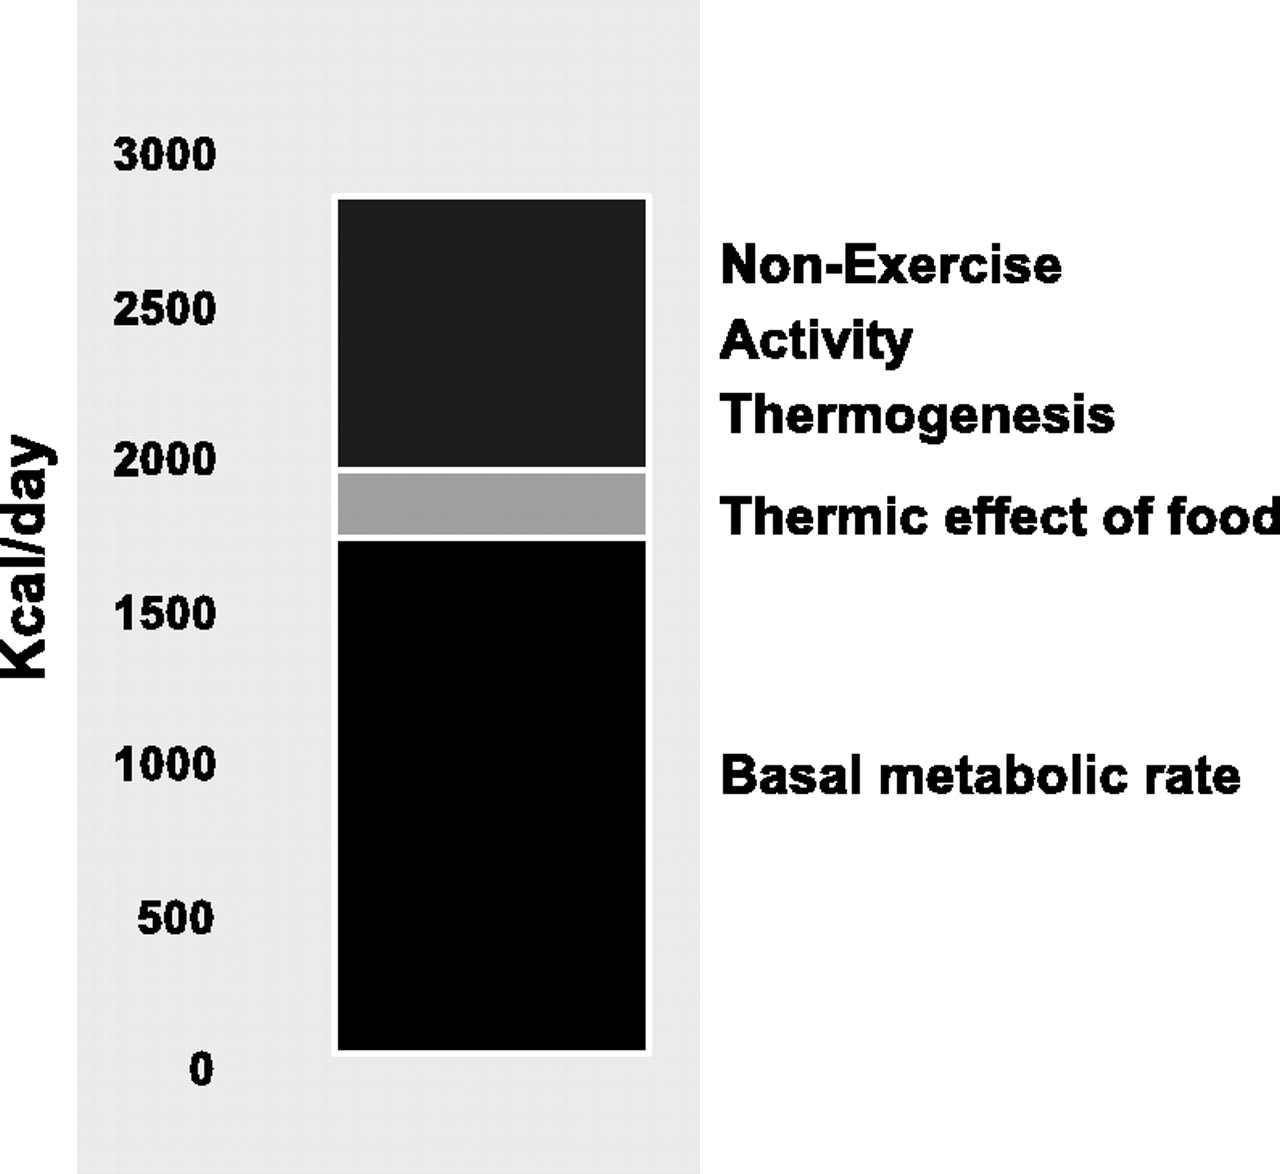 NEAT (non-exercise activity thermogenesis)